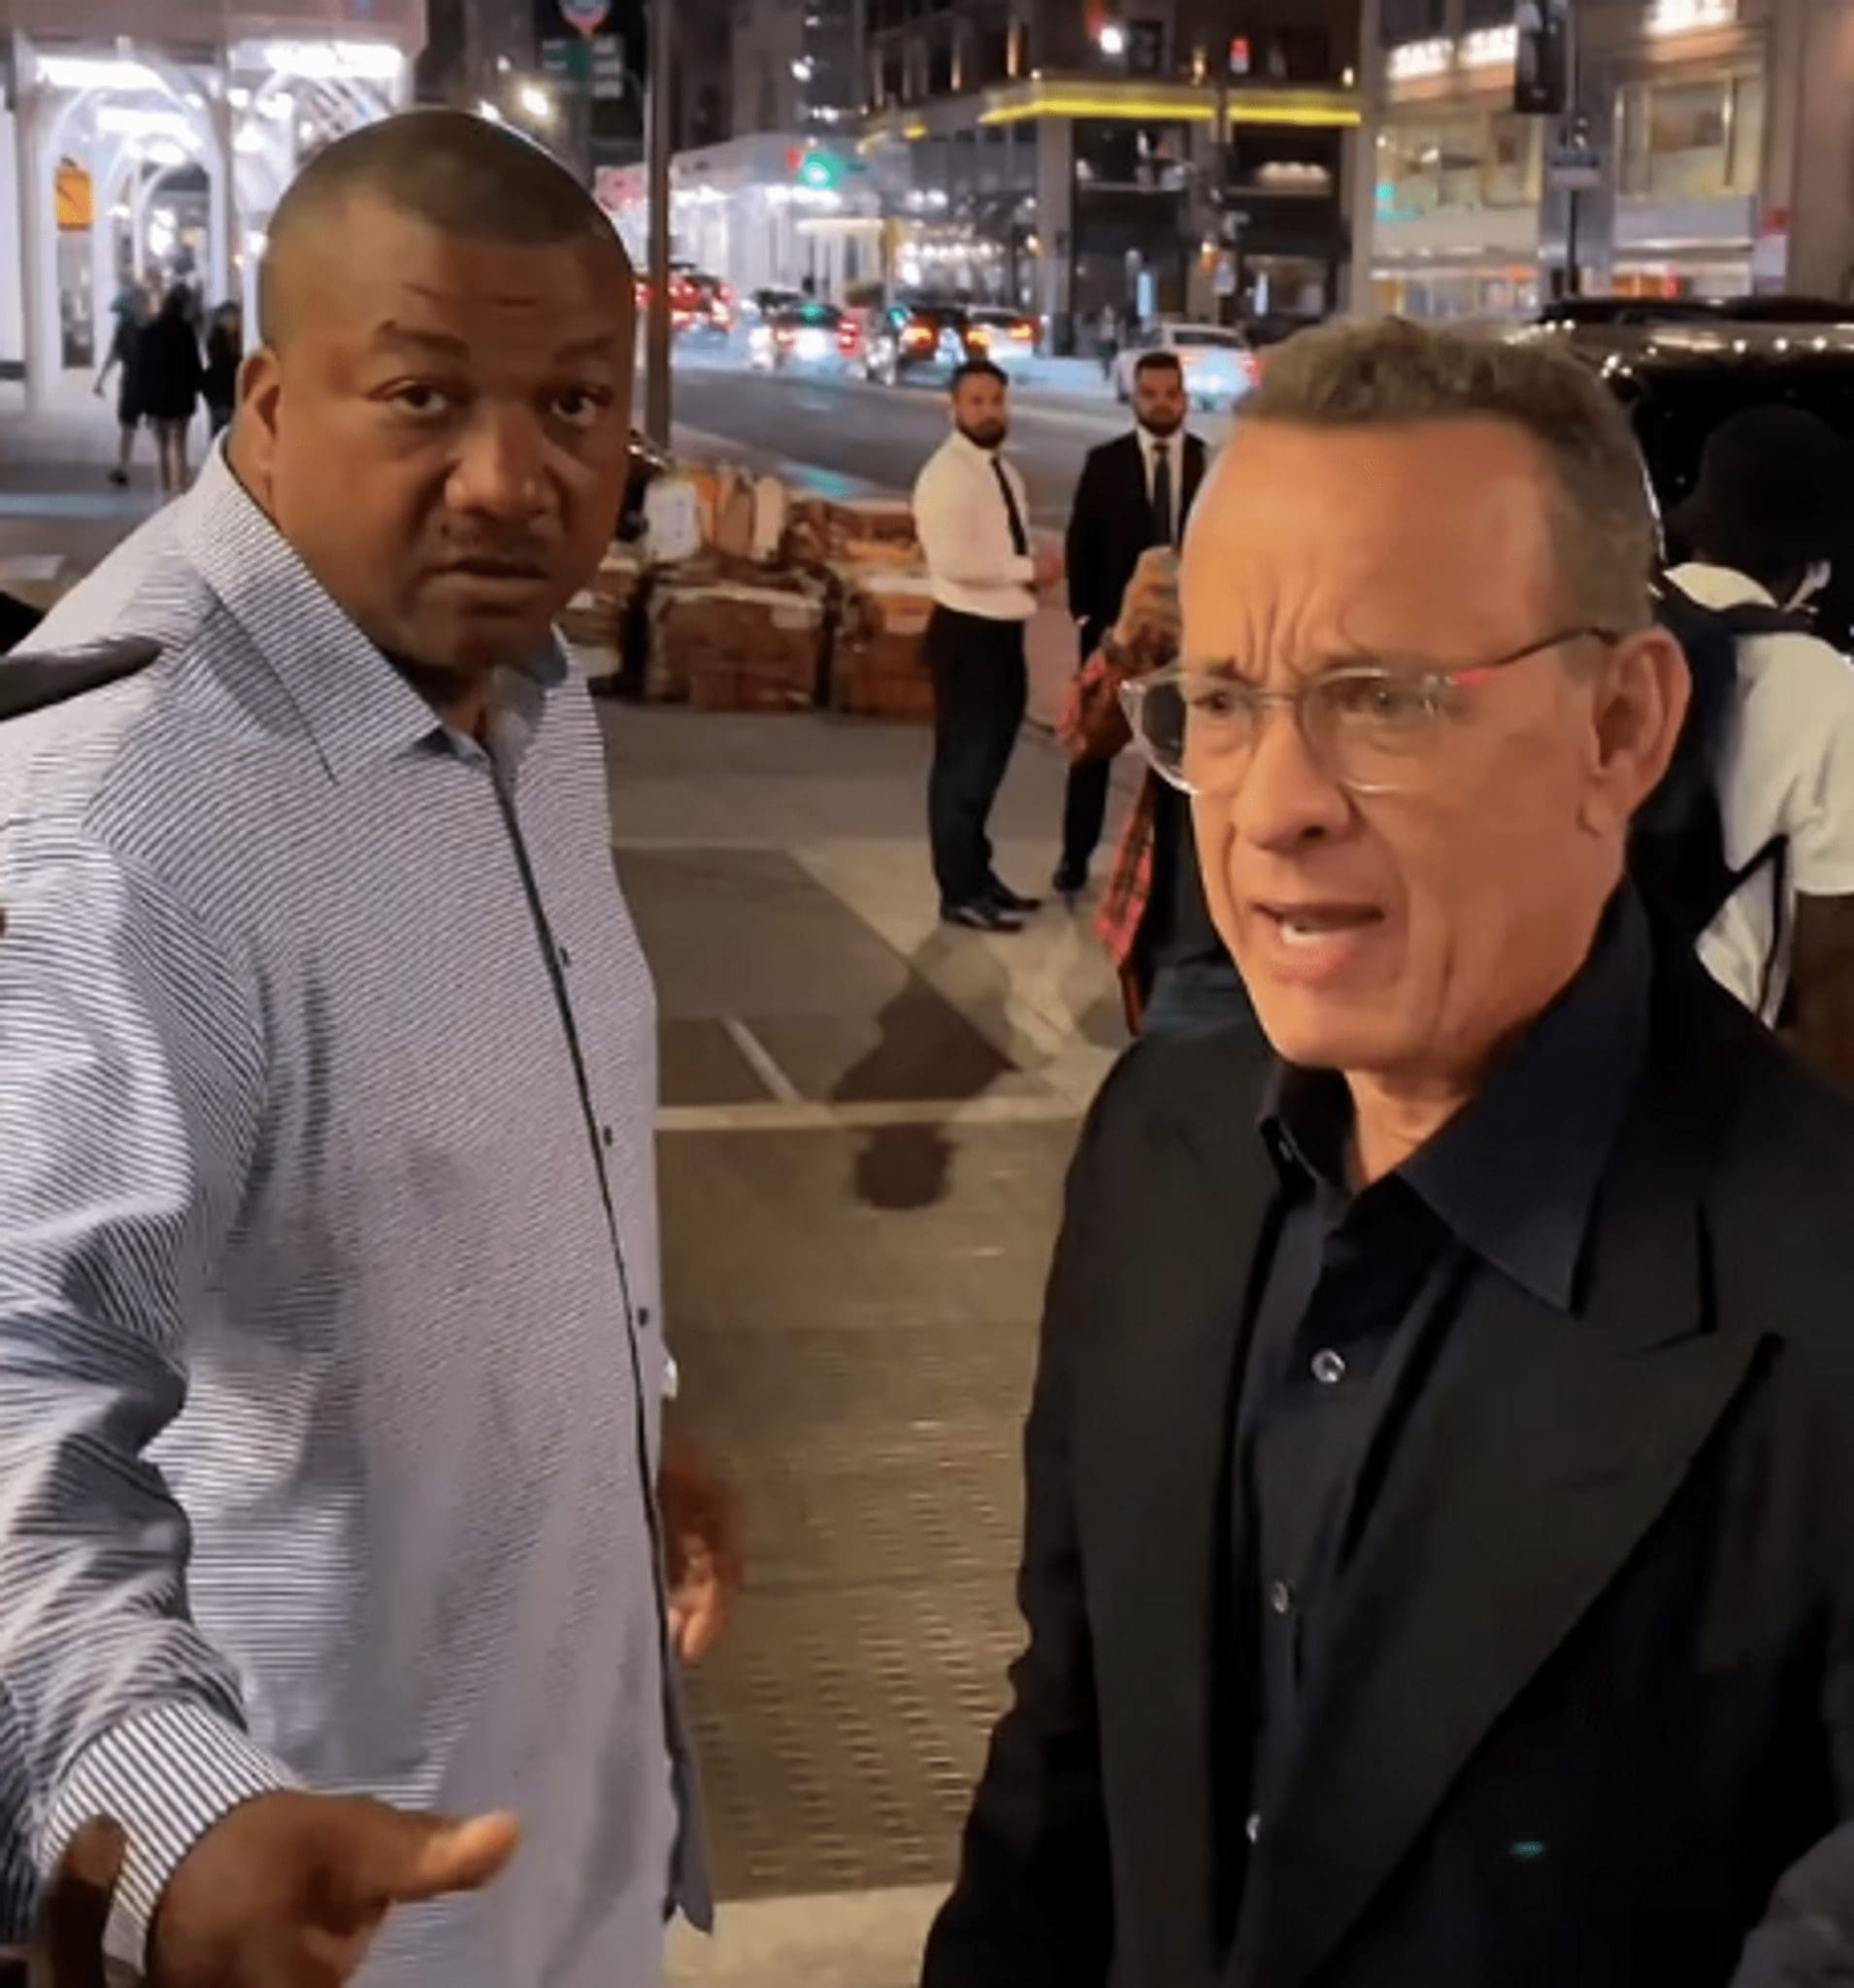 Tom Hanks responded to fans who knocked Rita Wilson off her feet